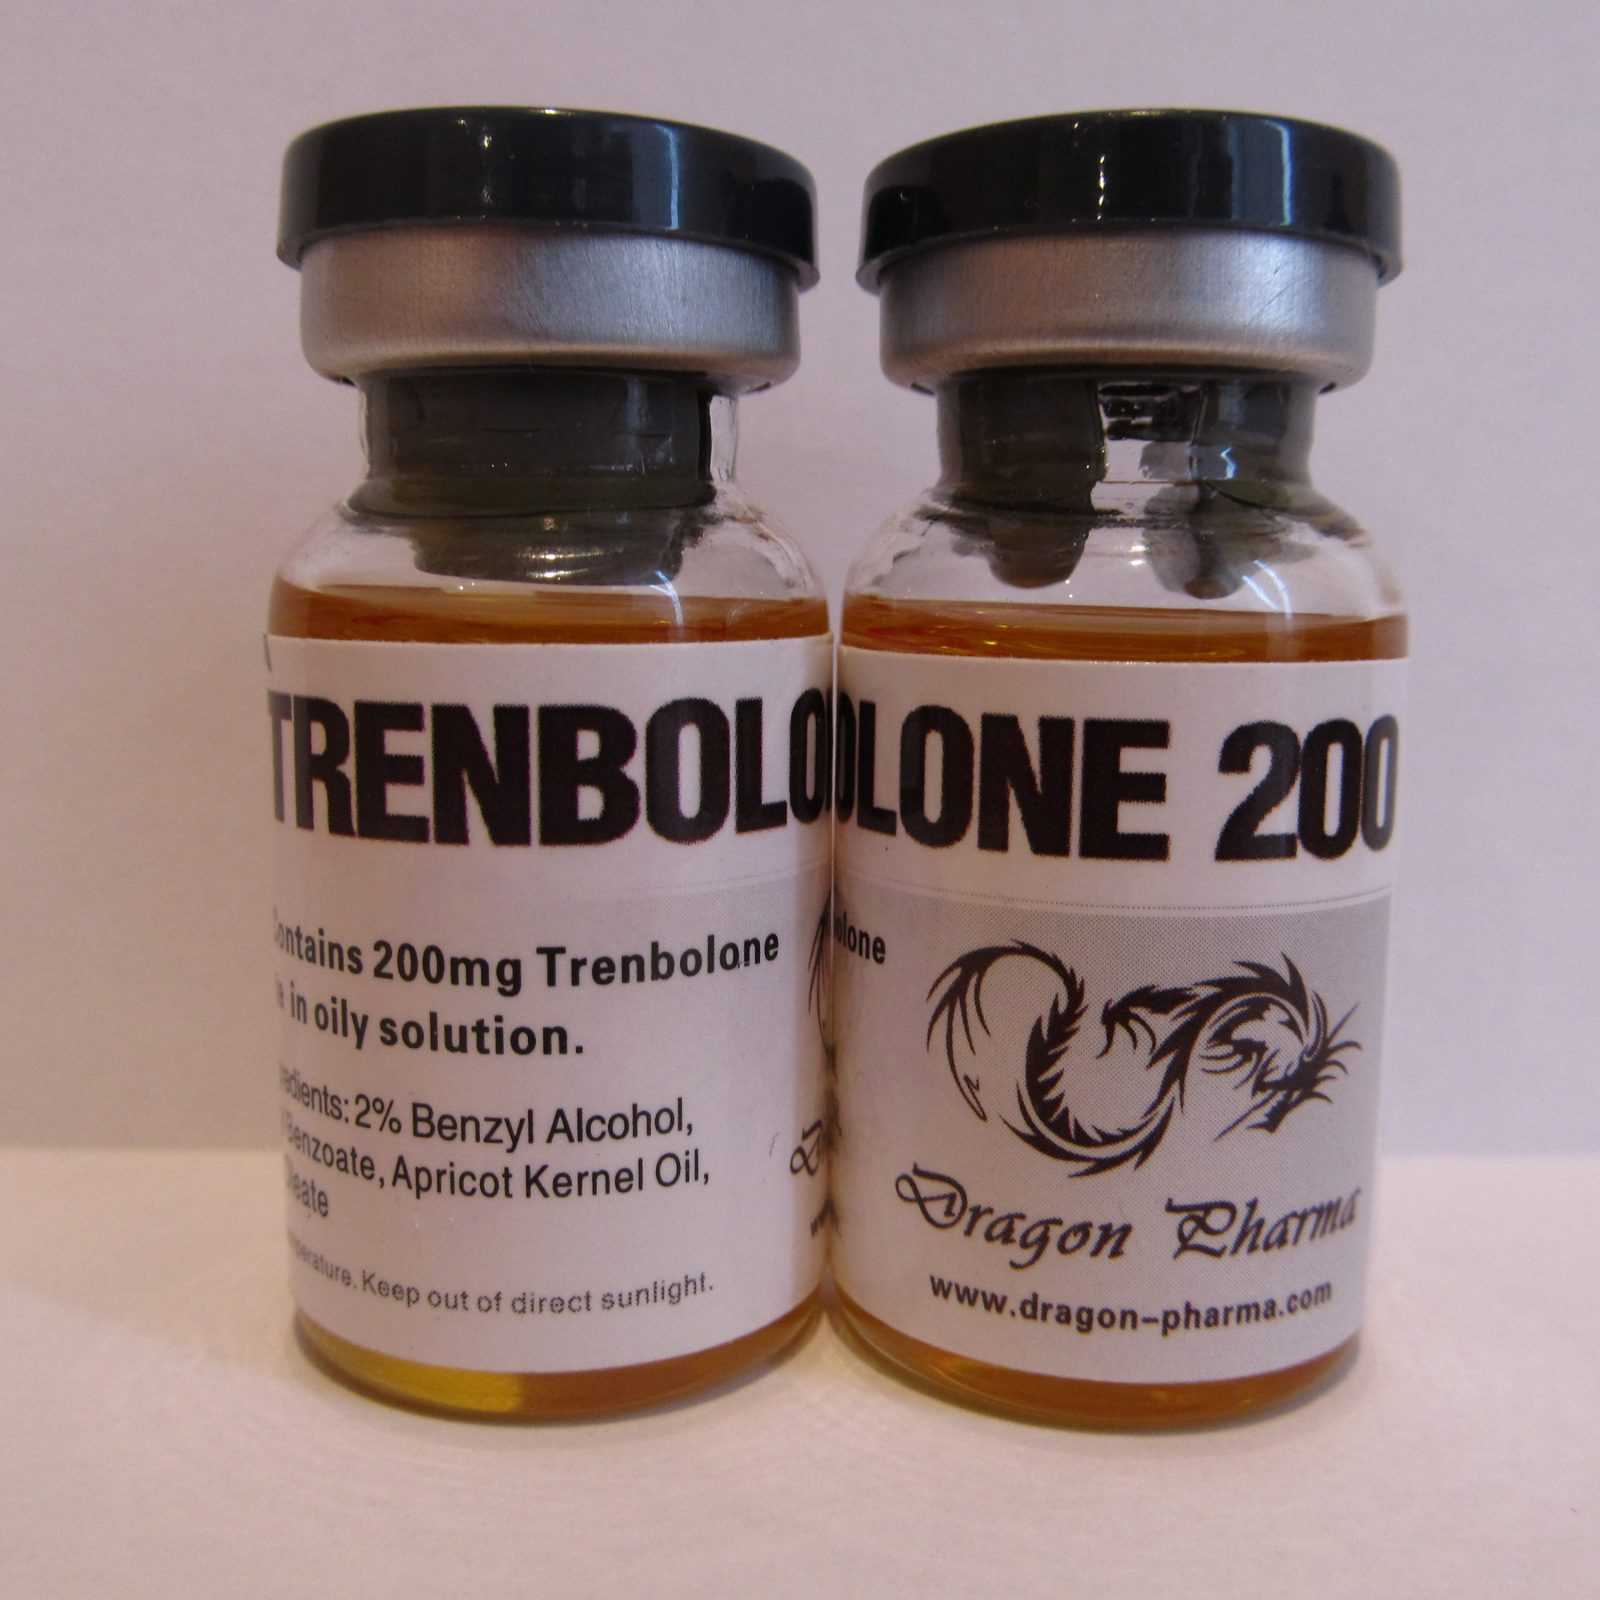 Trenbolone veterinary use